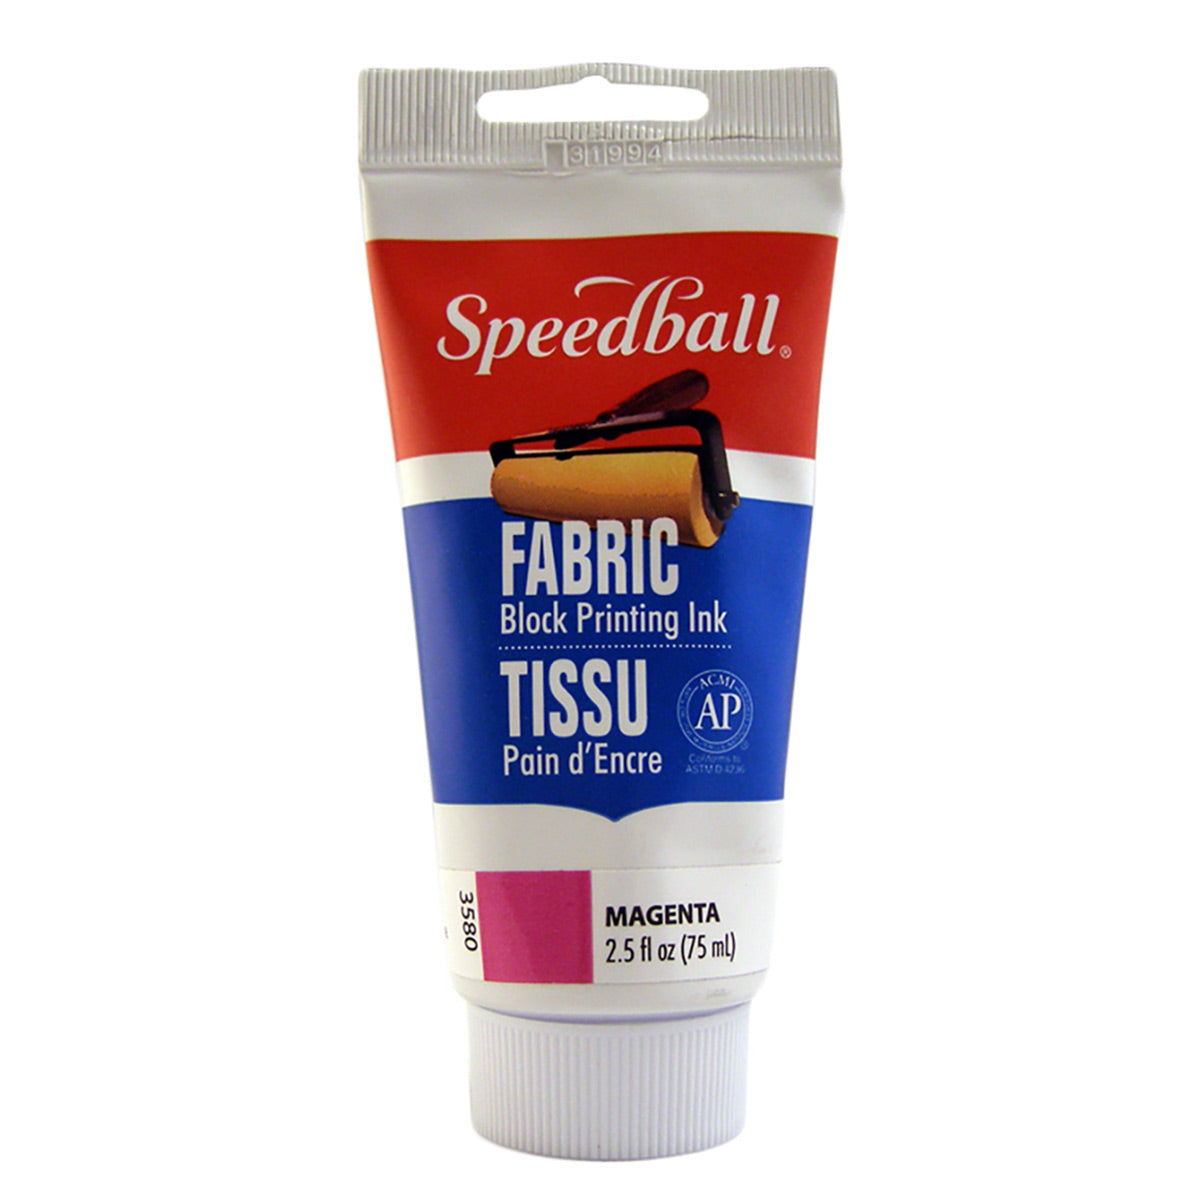 Speedball - Fabric Block Printing Ink 75ml (2.5oz) - Magenta